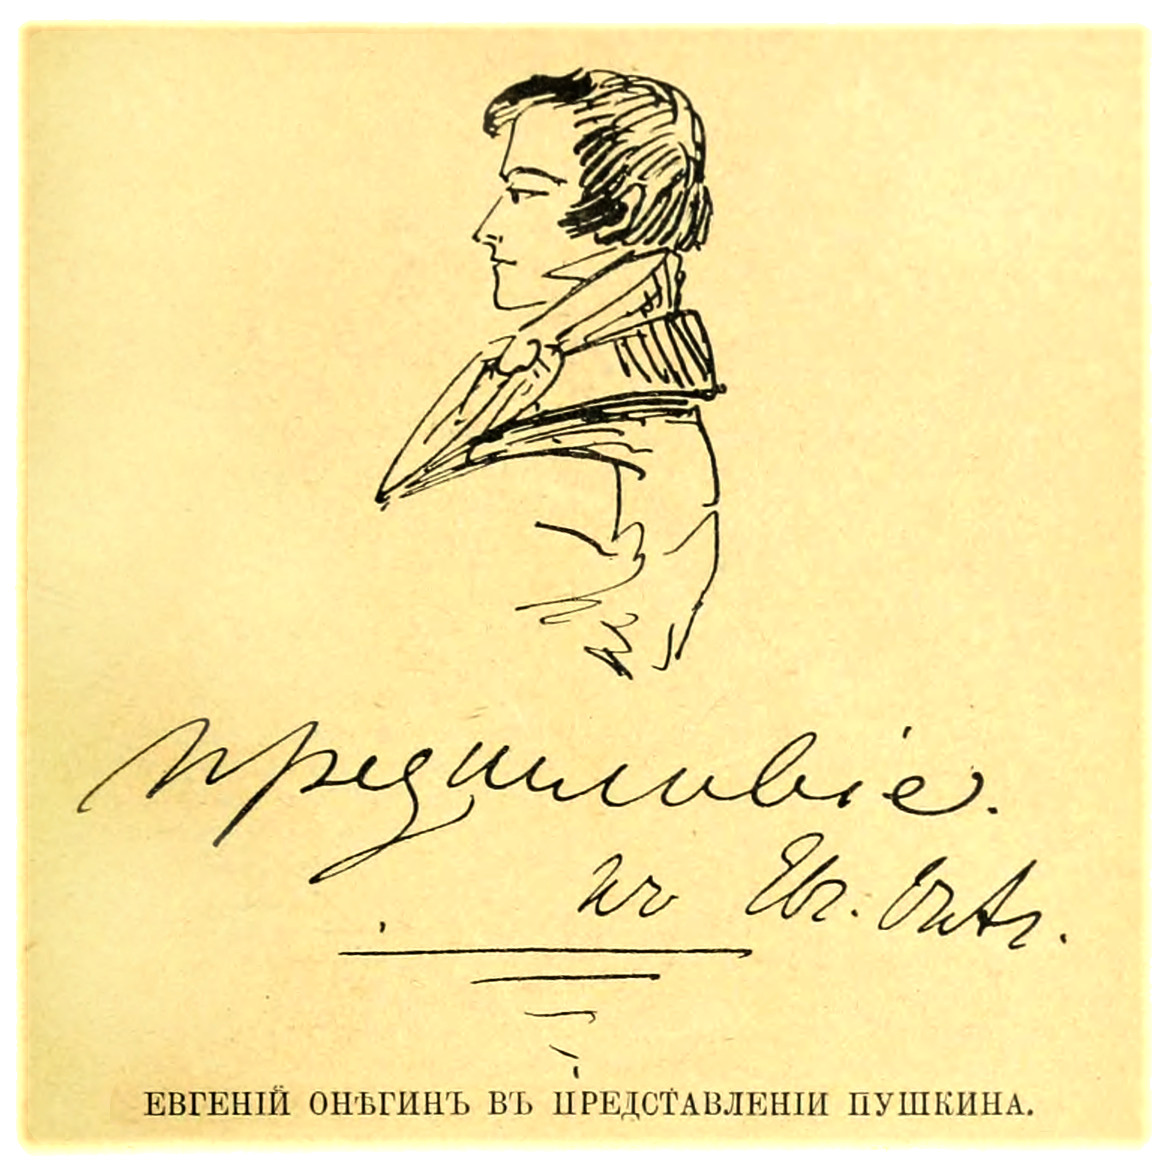 Eugene Onegin as imagined by Alexander Pushkin, 1830.